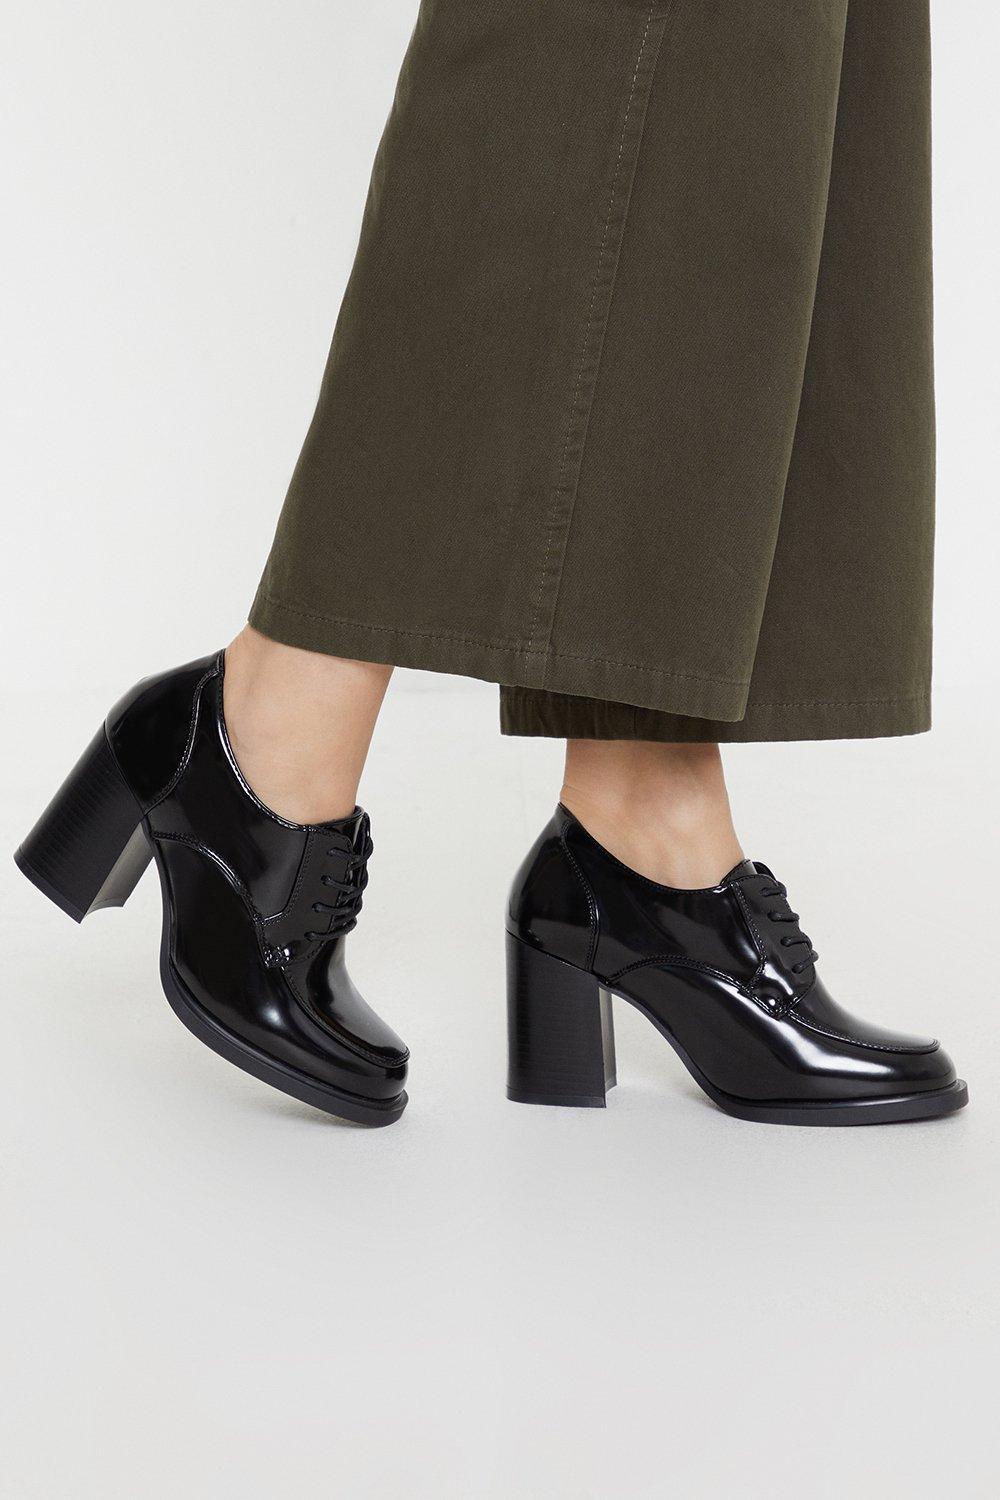 Women’s Principles: Lara Front Lace Up High Block Heel Shoe - true black - 6